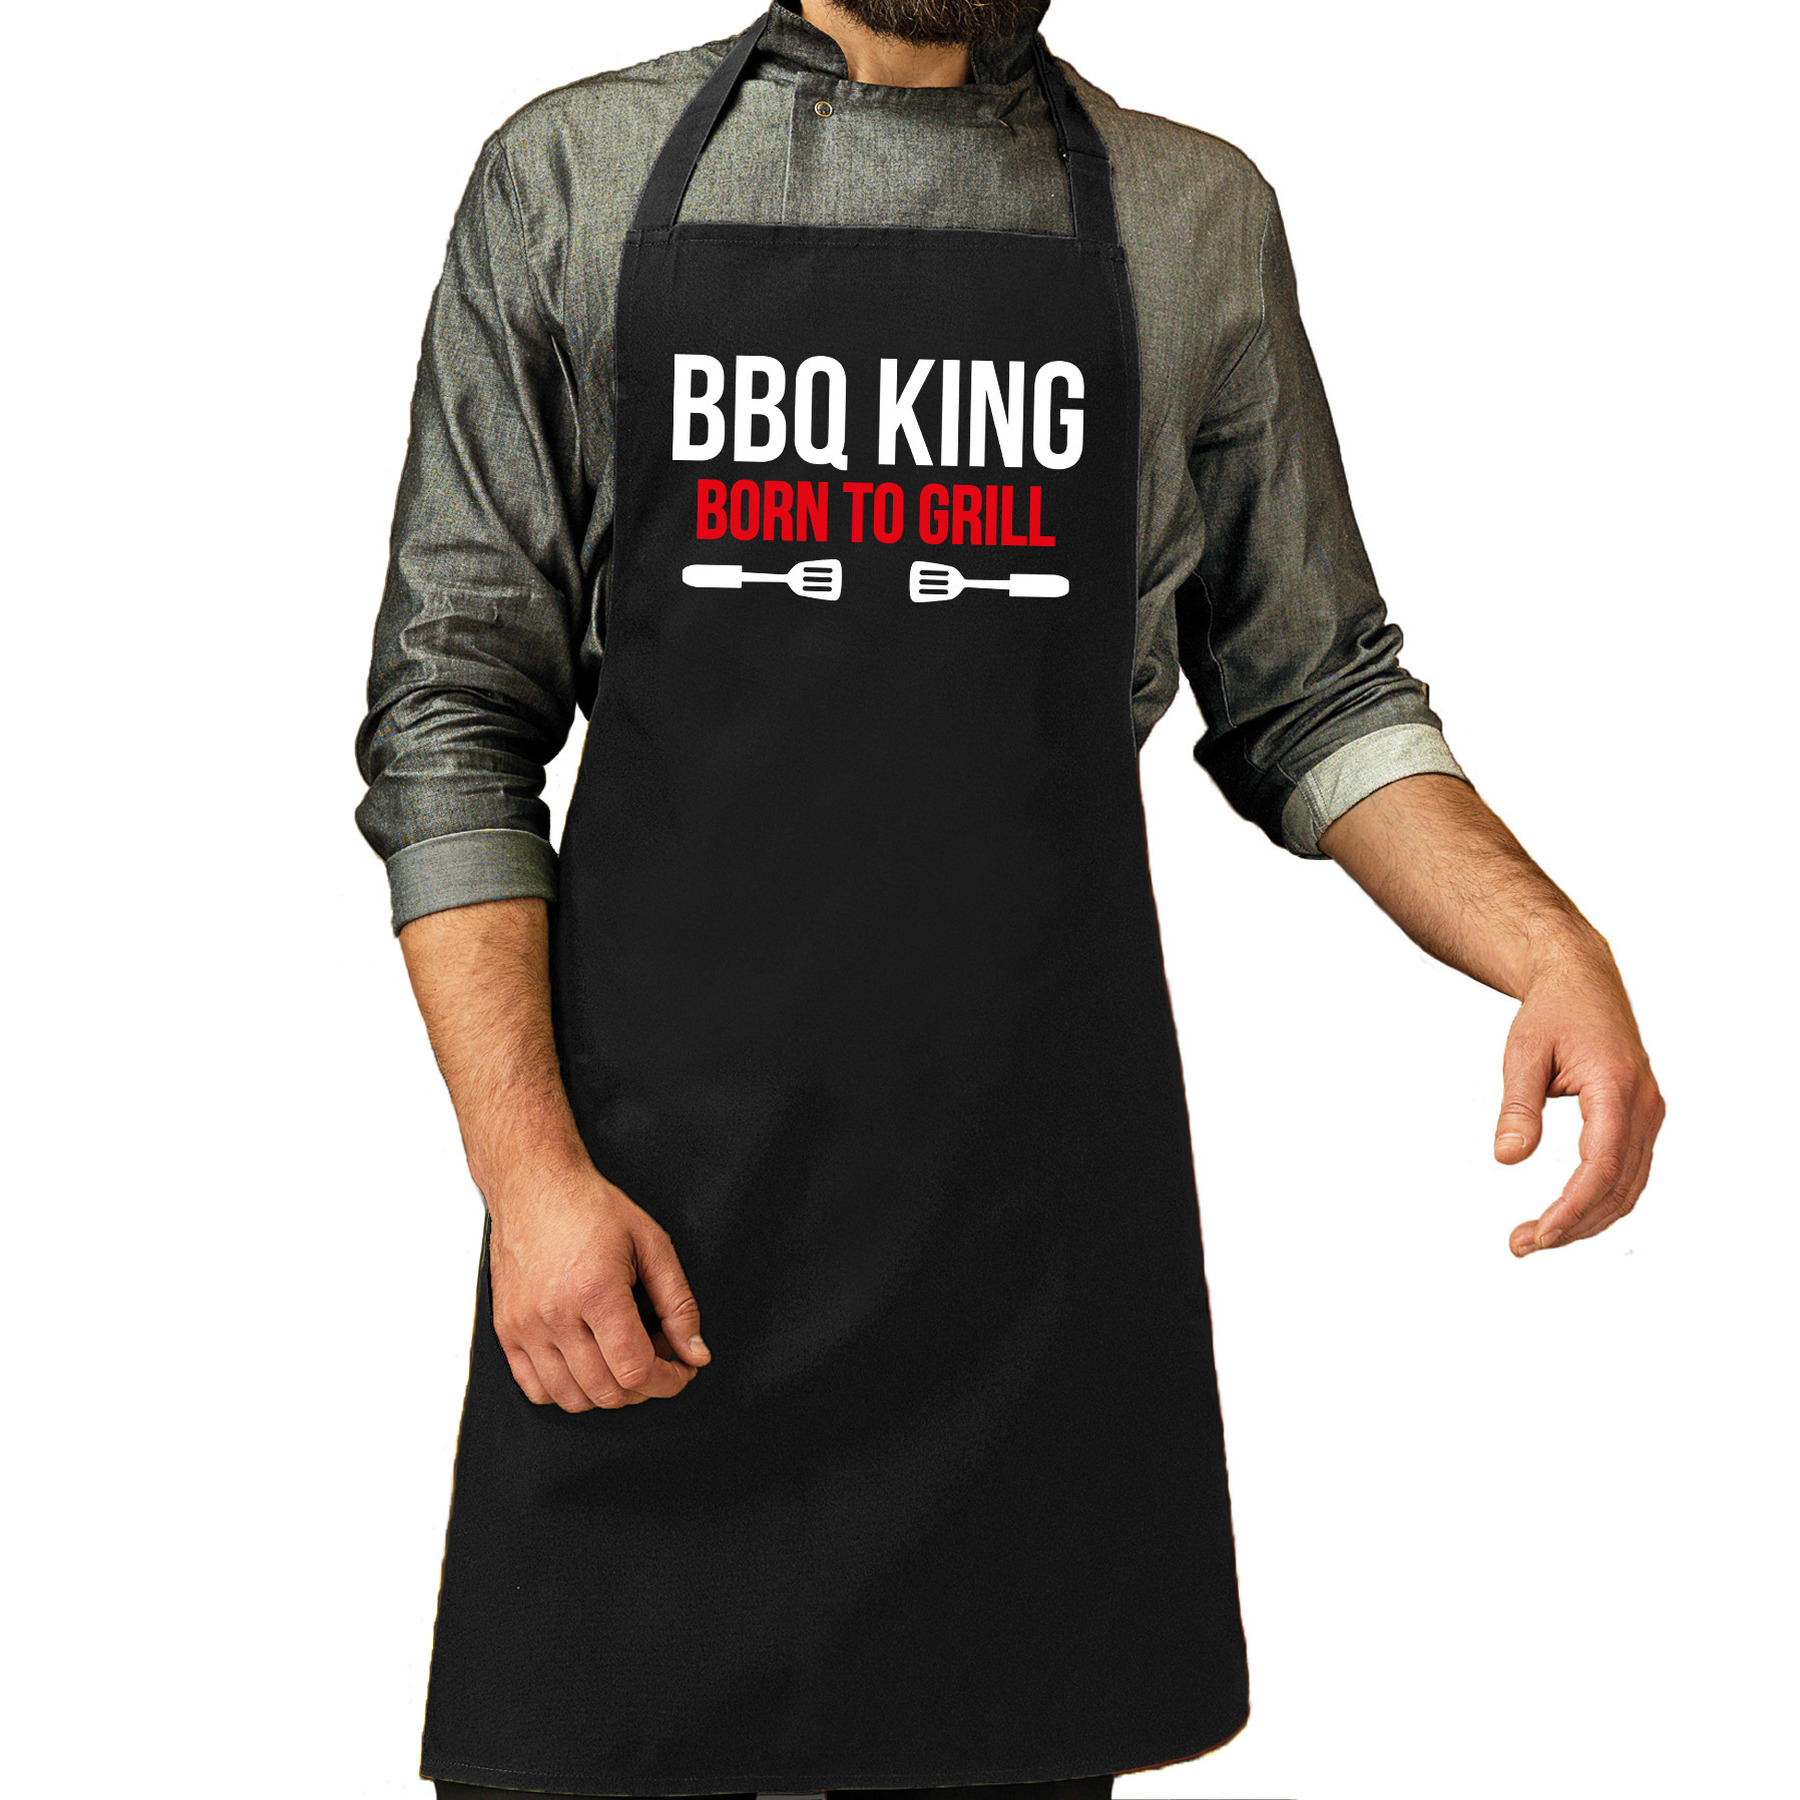 Bbq king born to grill barbecue schort-keukenschort zwart heren